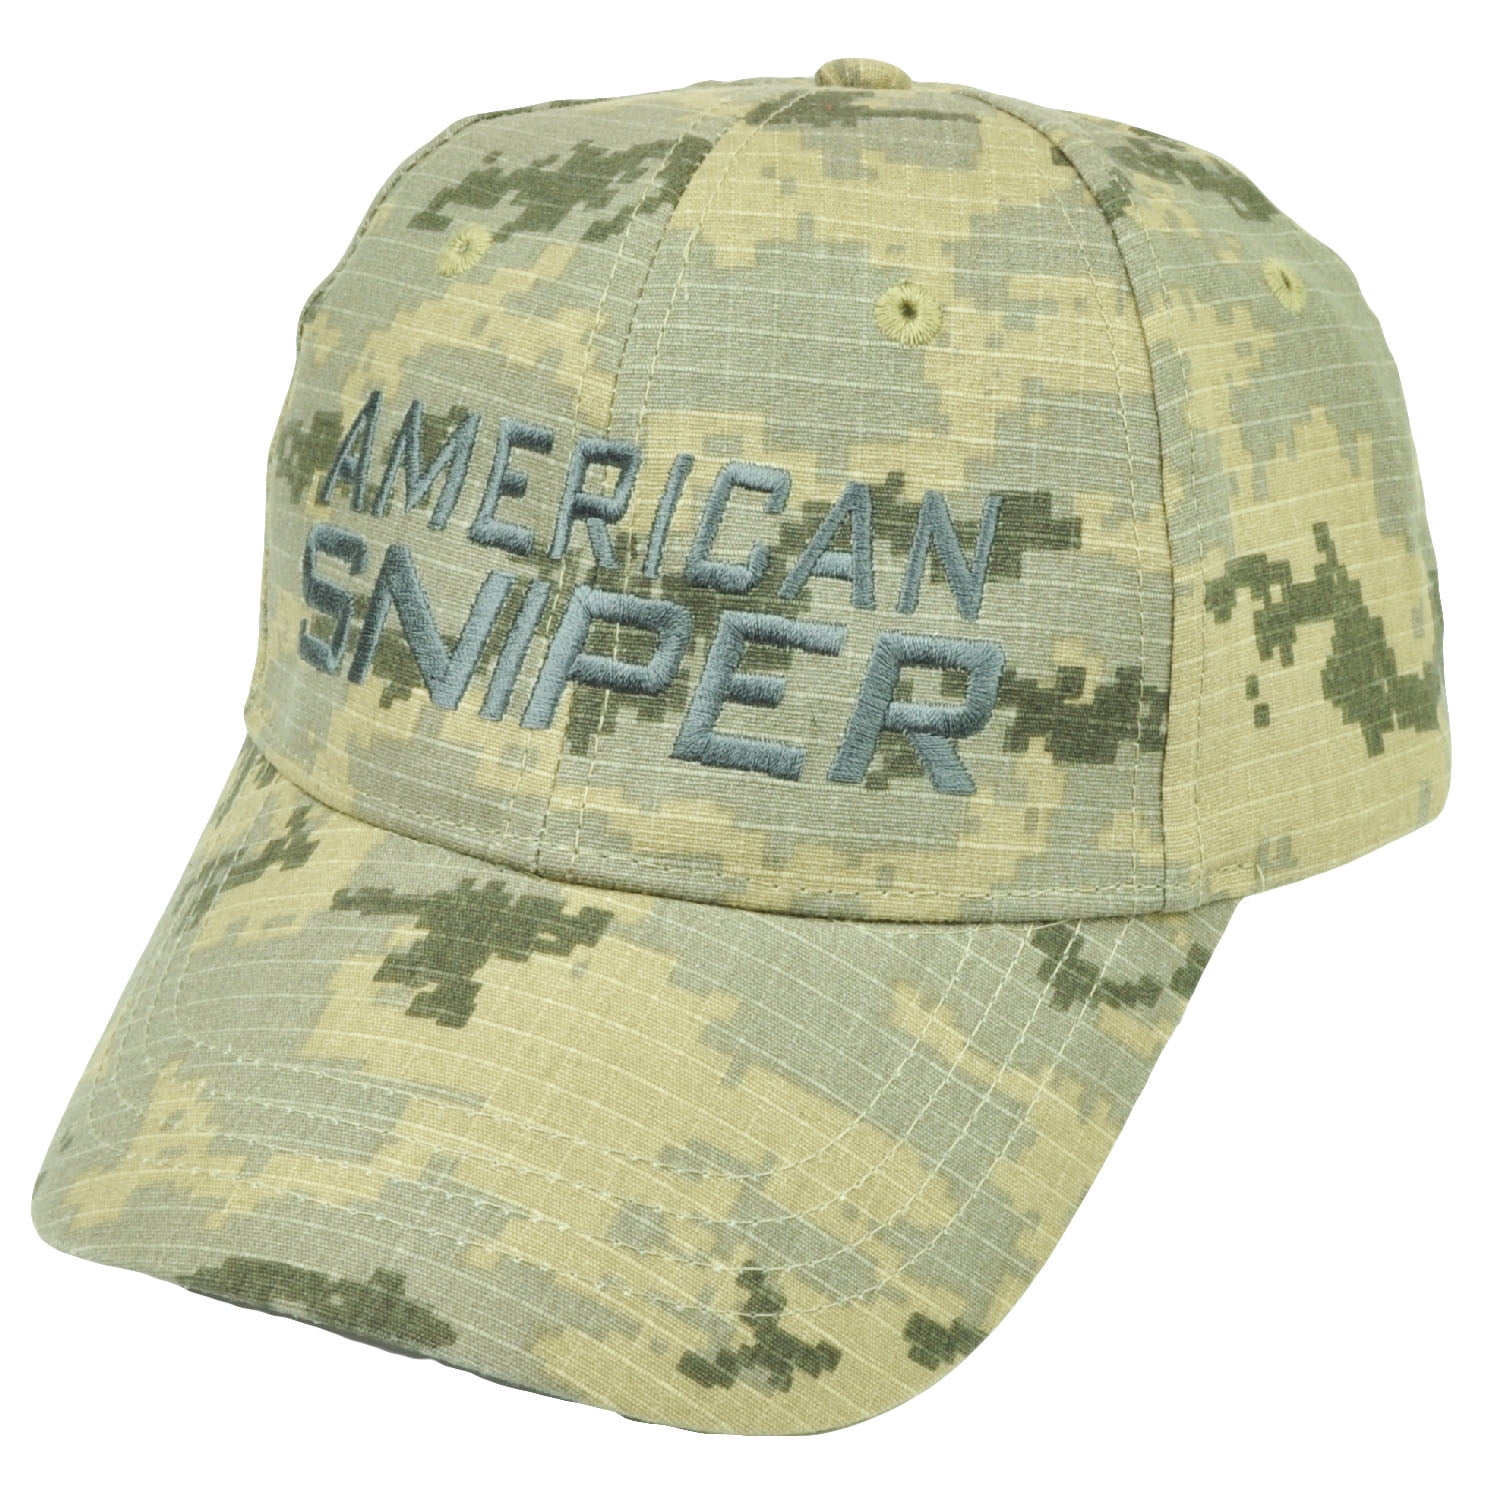 American Sniper Digital Camouflage Camo Hat Cap Gun  Skull War Support